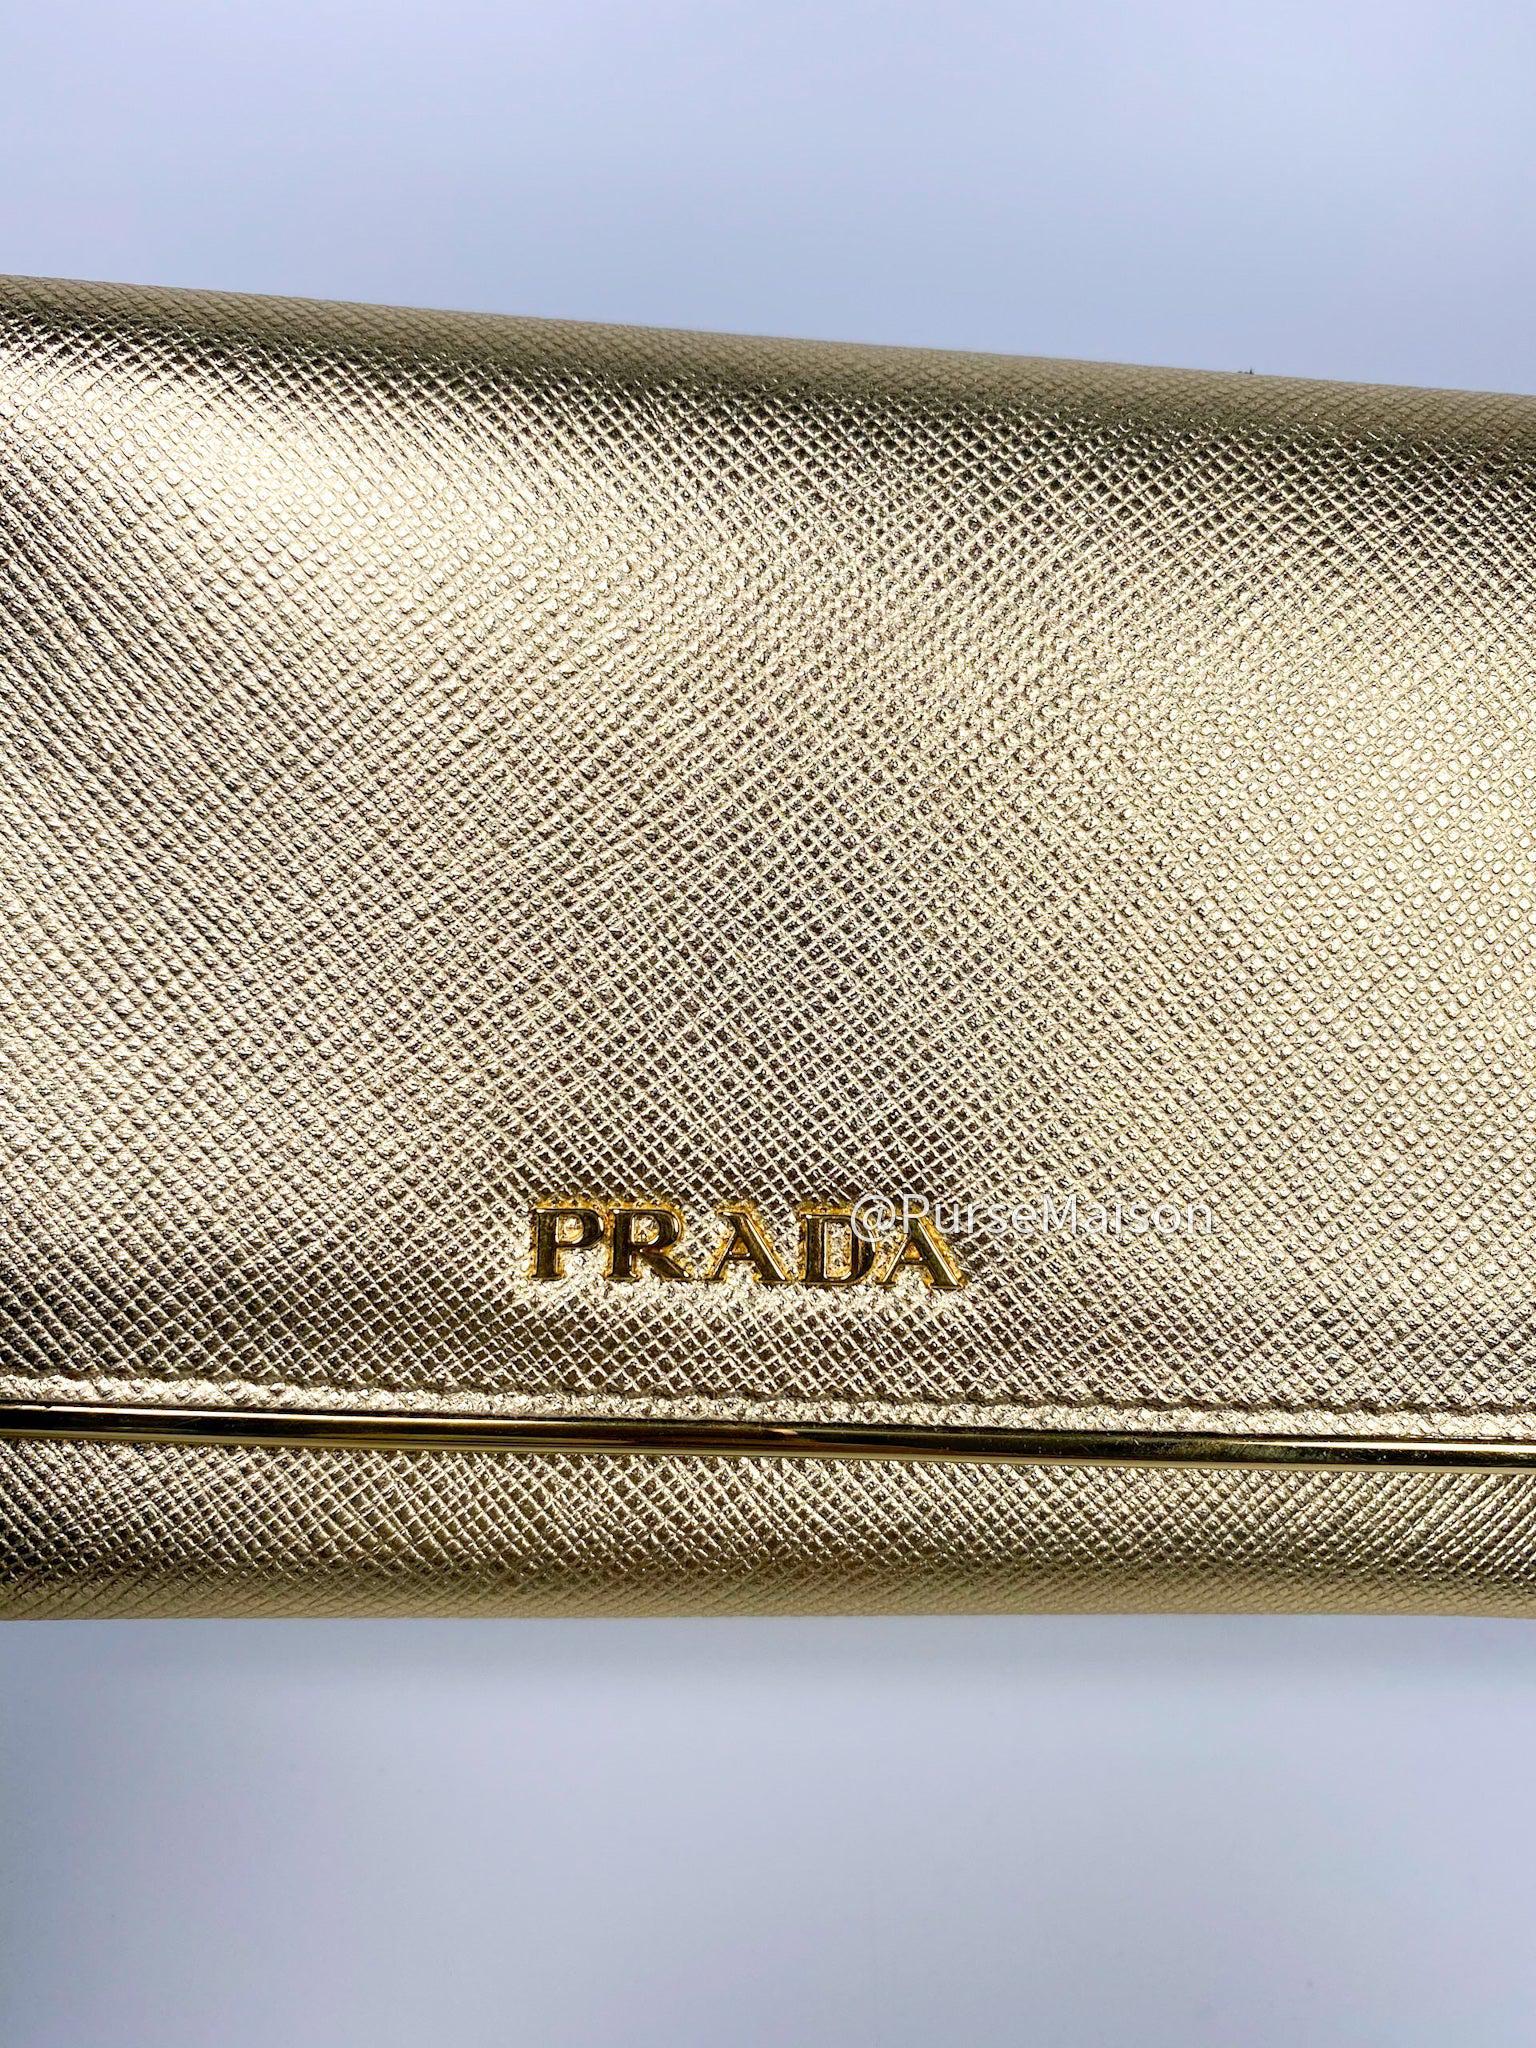 Prada 1MC004 Saffiano Metal Platino Slim Wallet and Cardholder